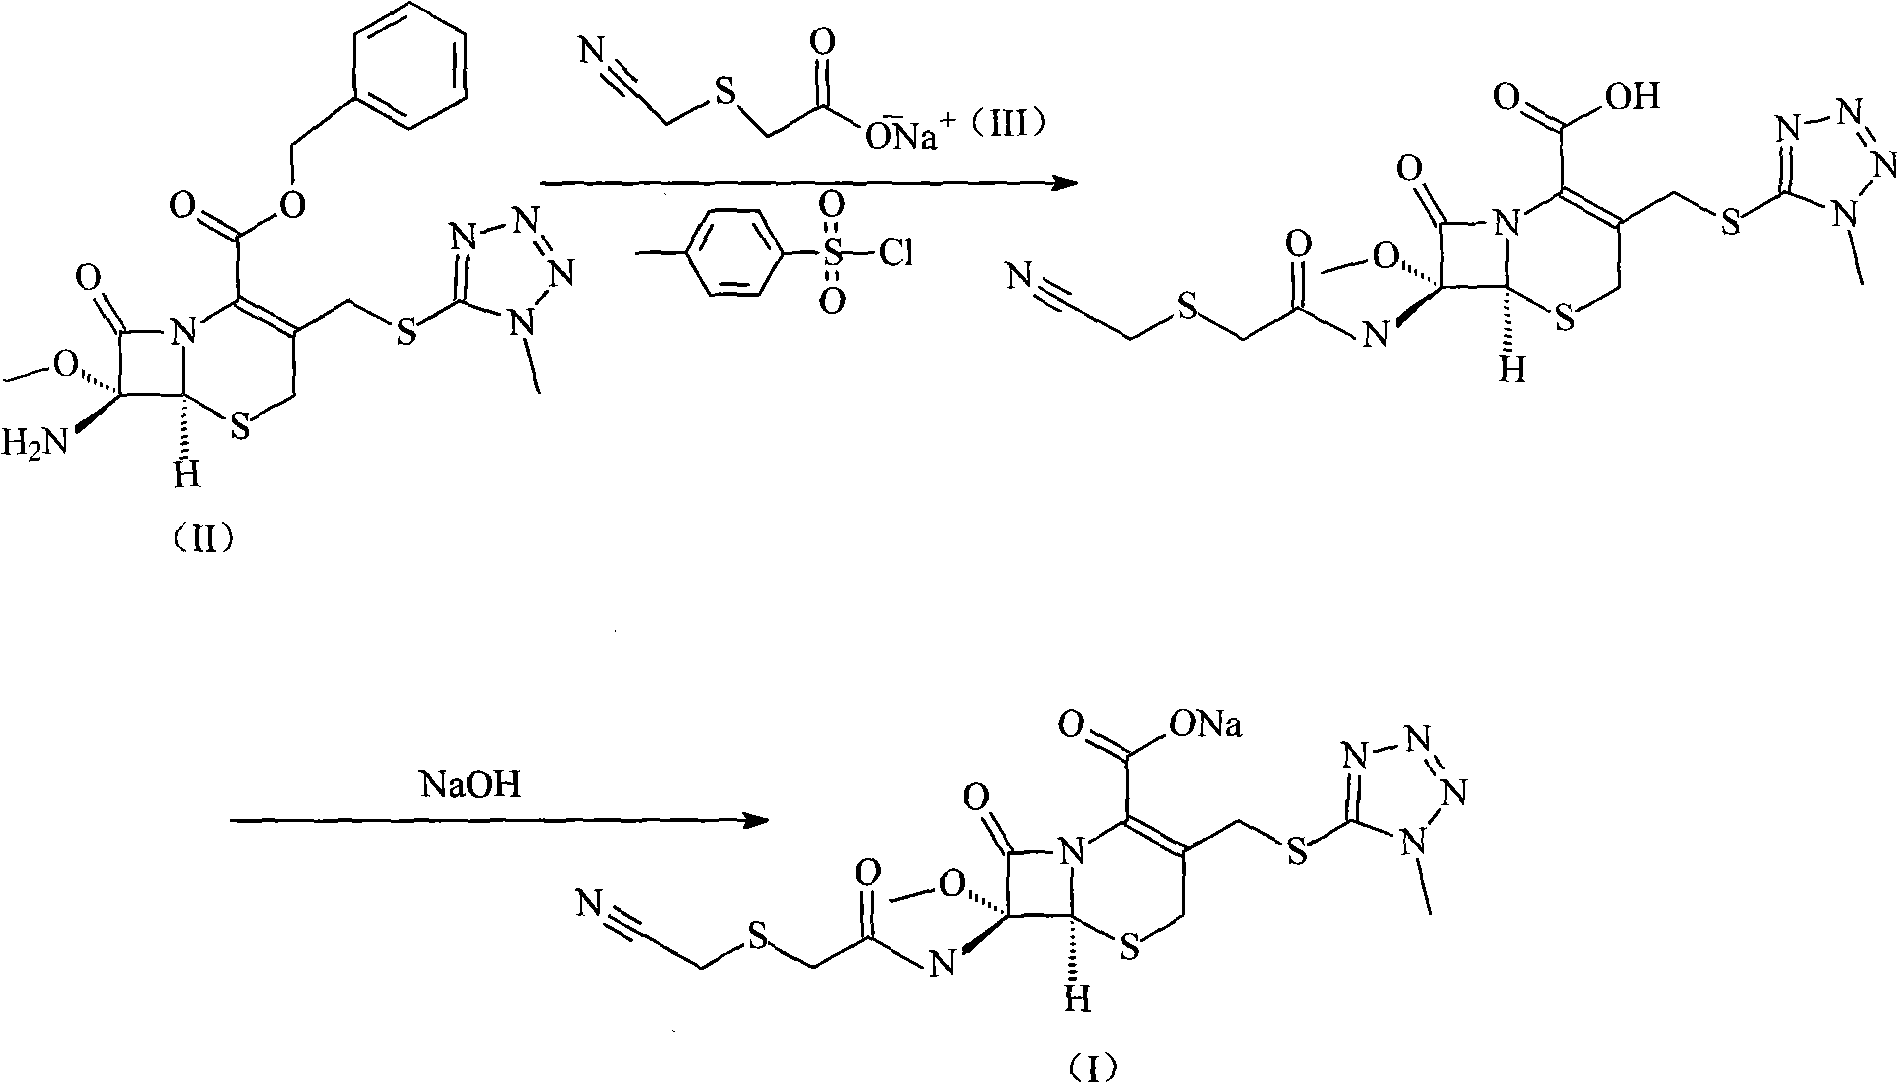 Cefmetazole sodium compound and synthetic method thereof